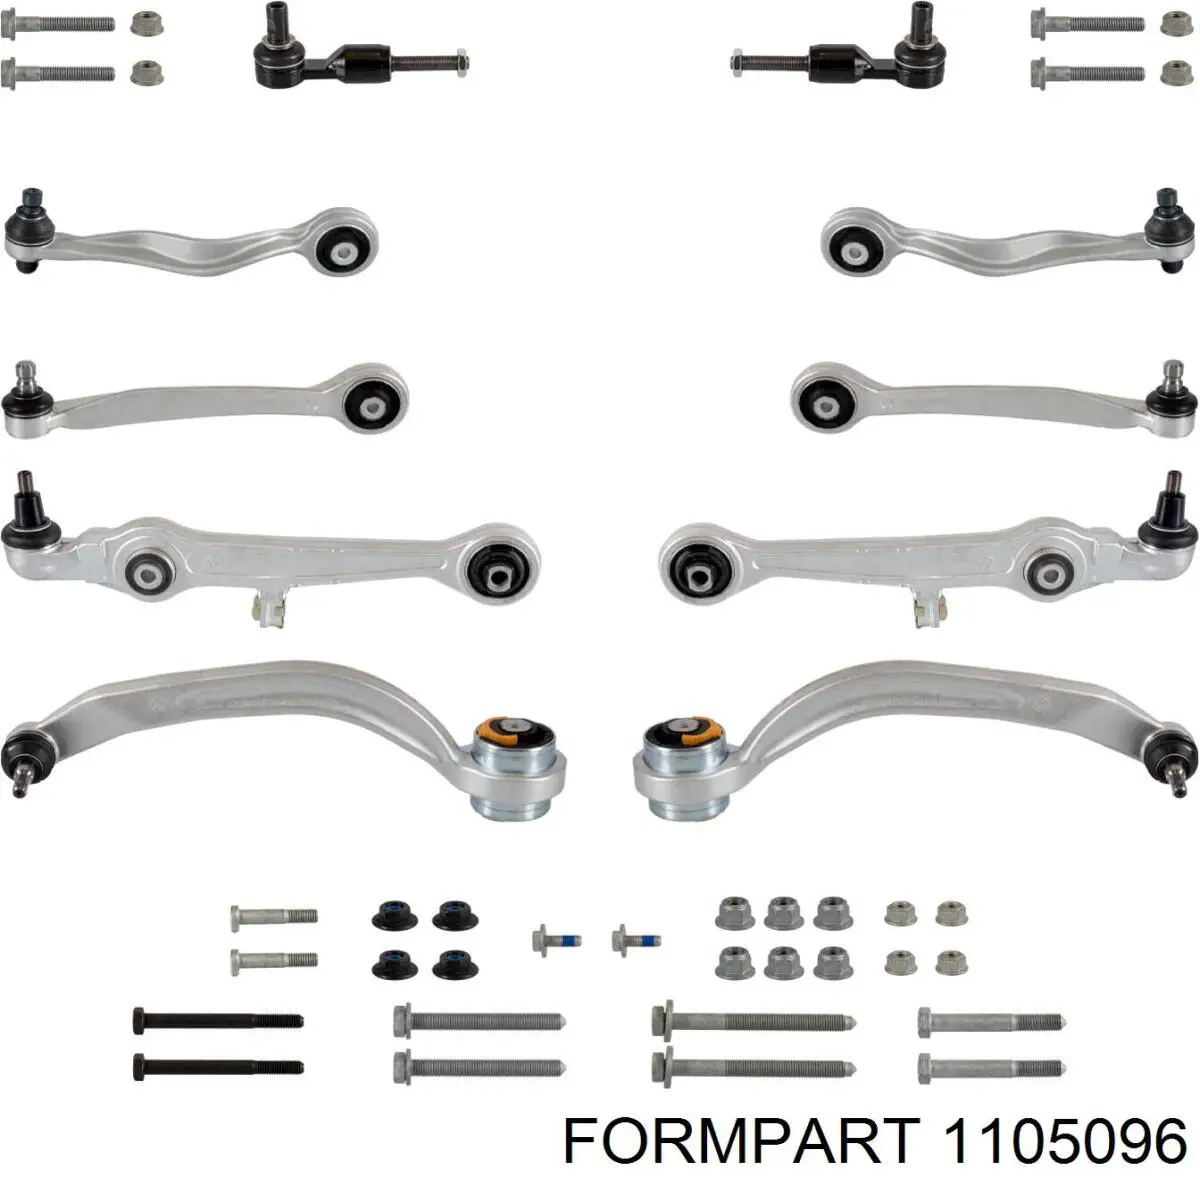 1105096 Formpart/Otoform kit de brazo de suspension delantera